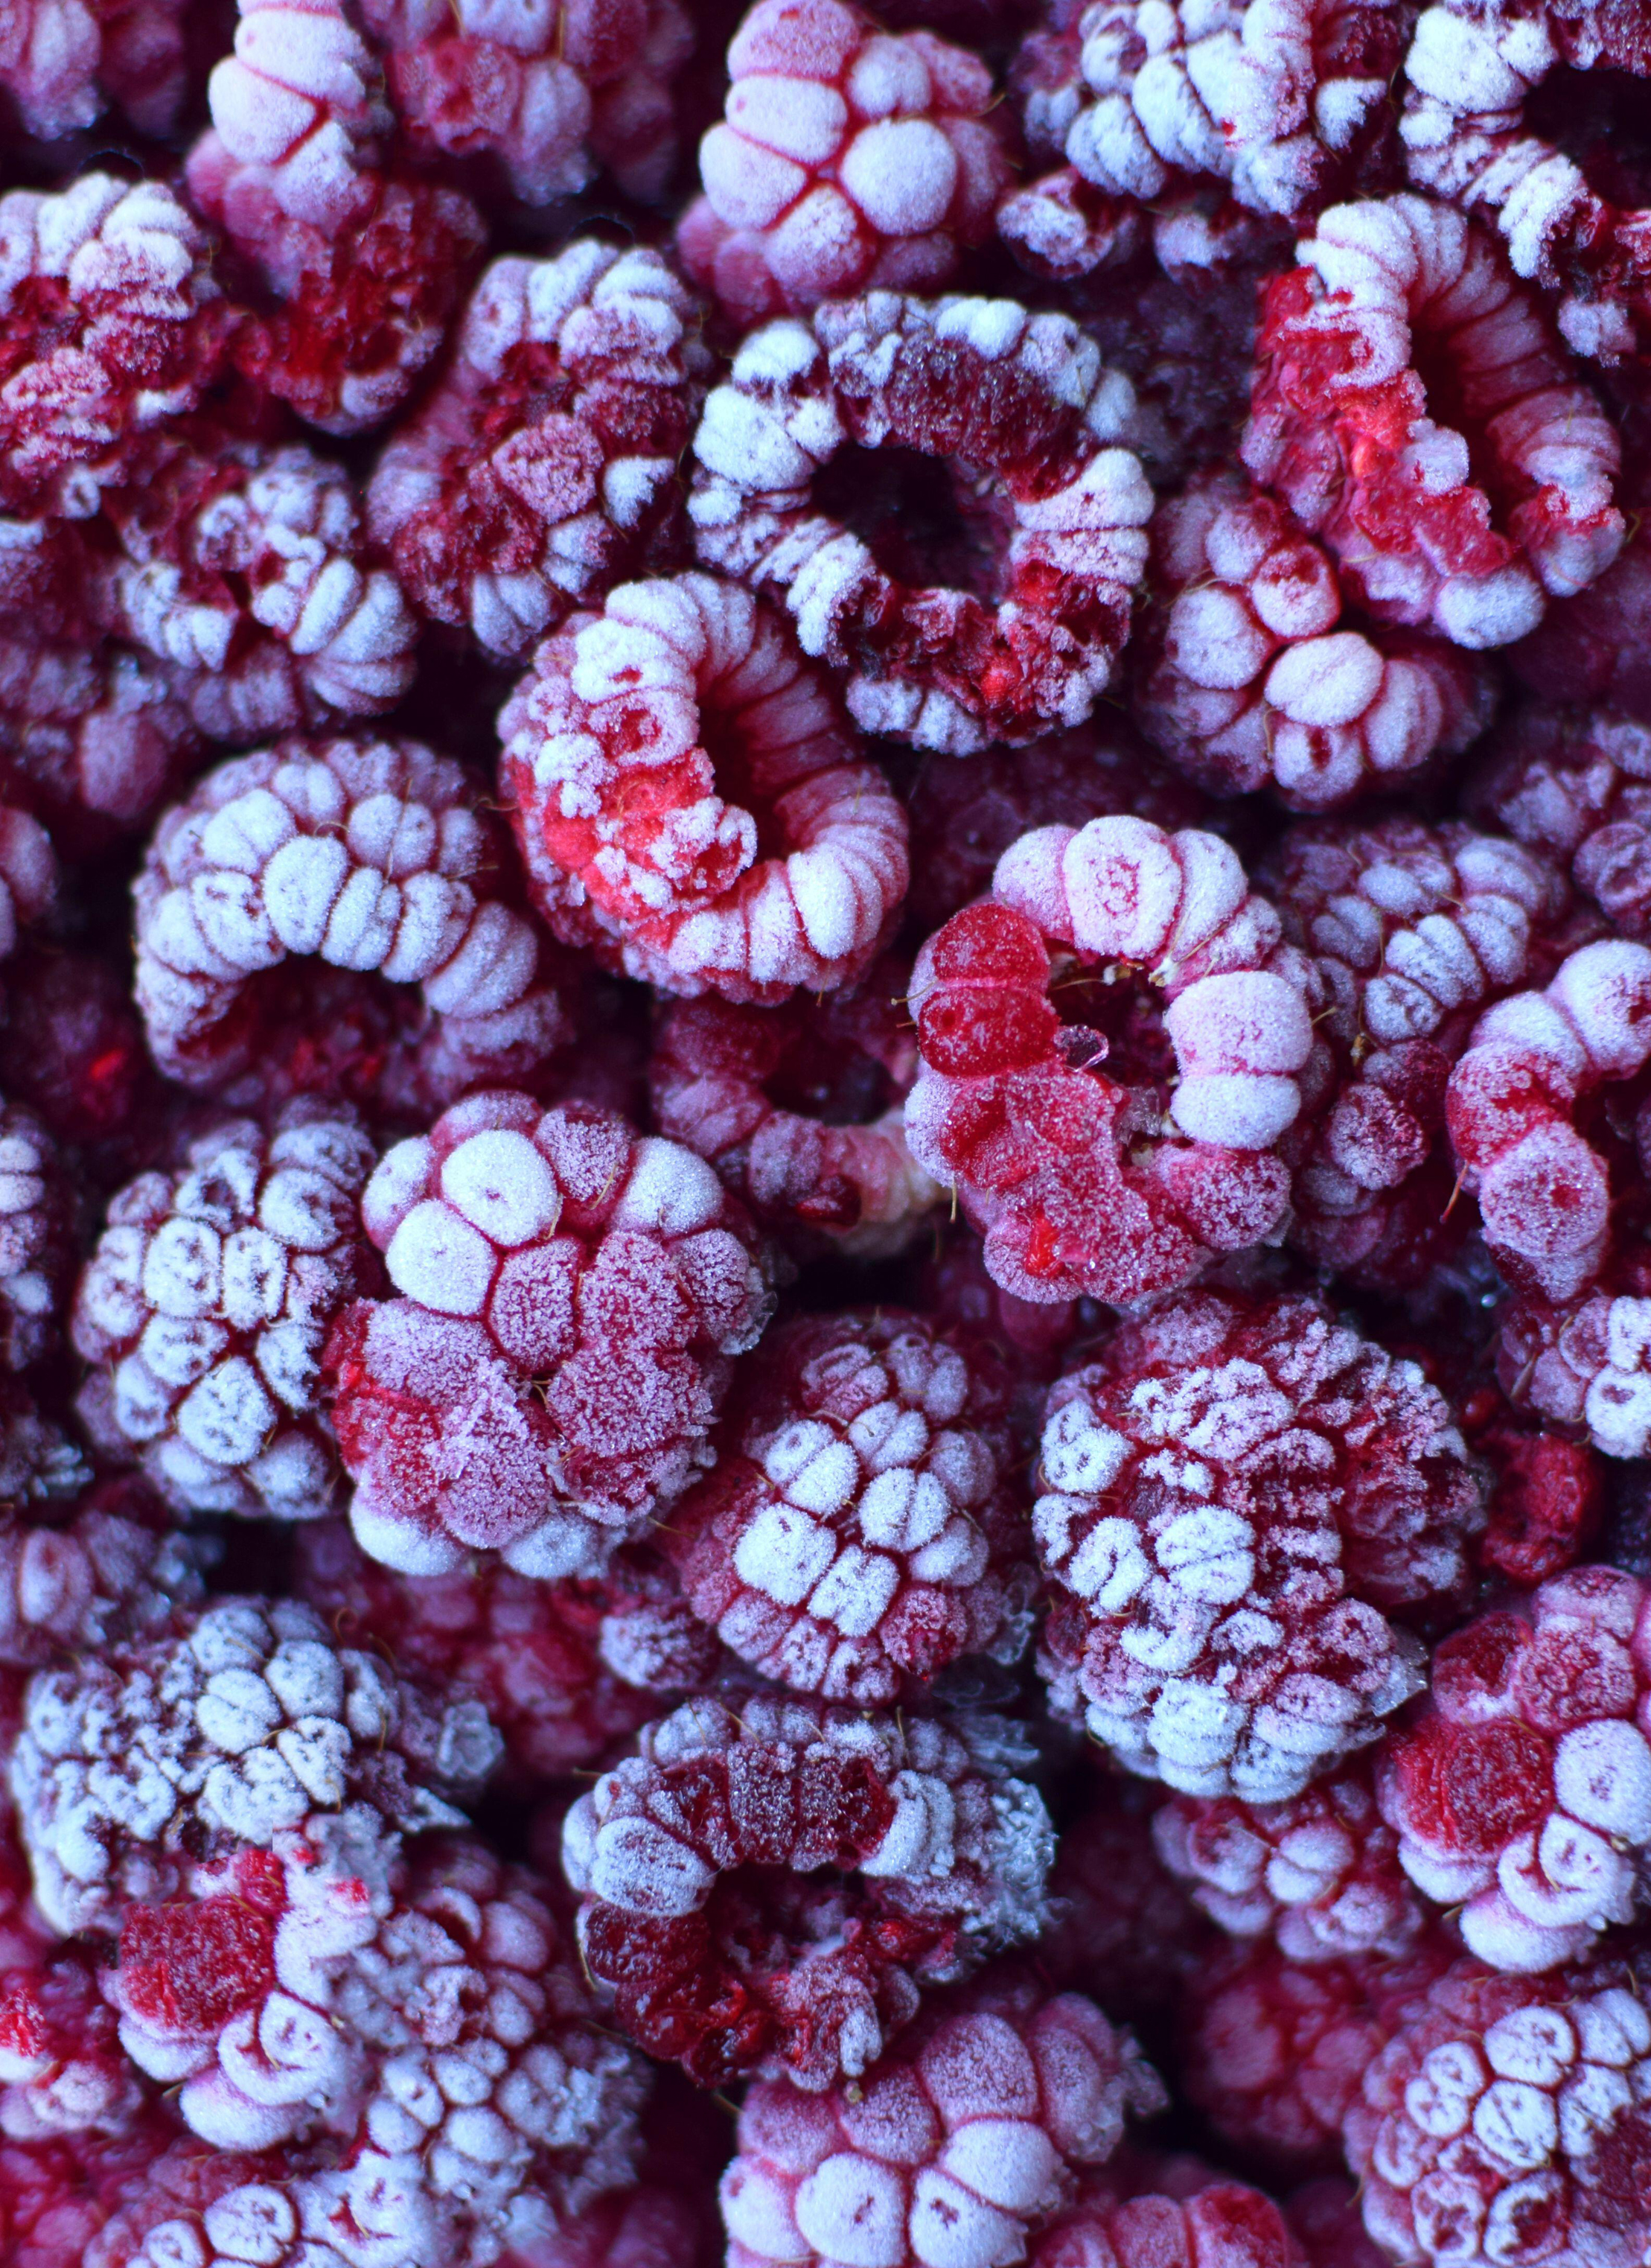 Frozen raspberries (Alamy/PA)